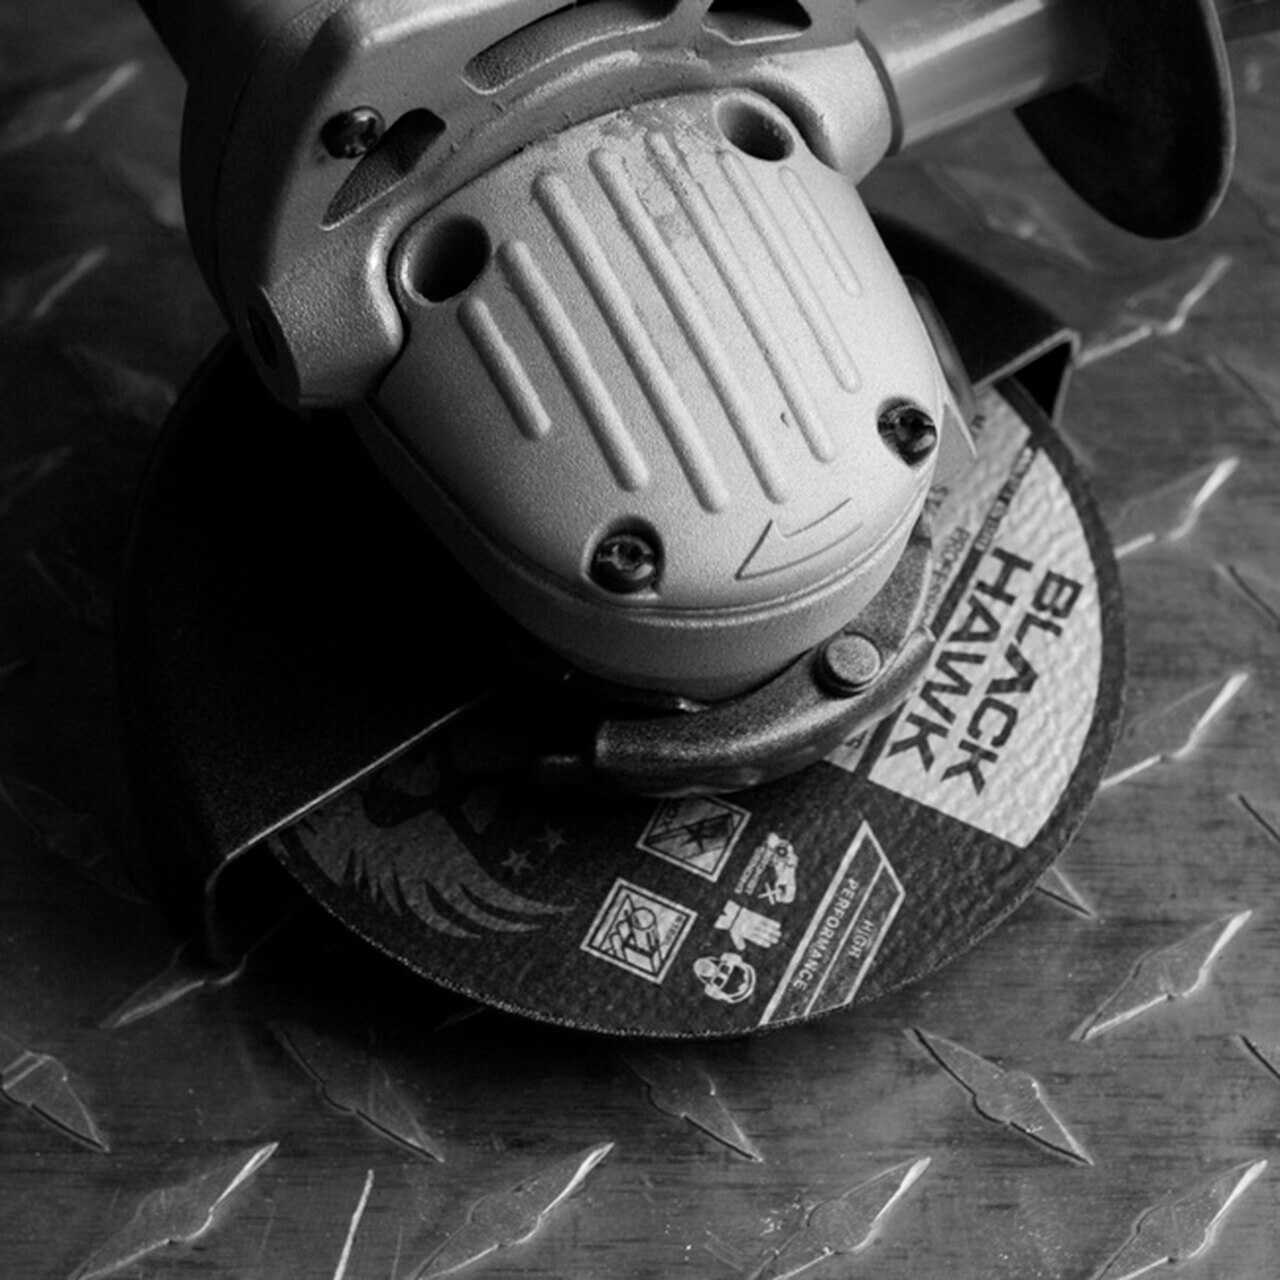 Blackhawk Abrasives cutoff wheel in an angle grinder